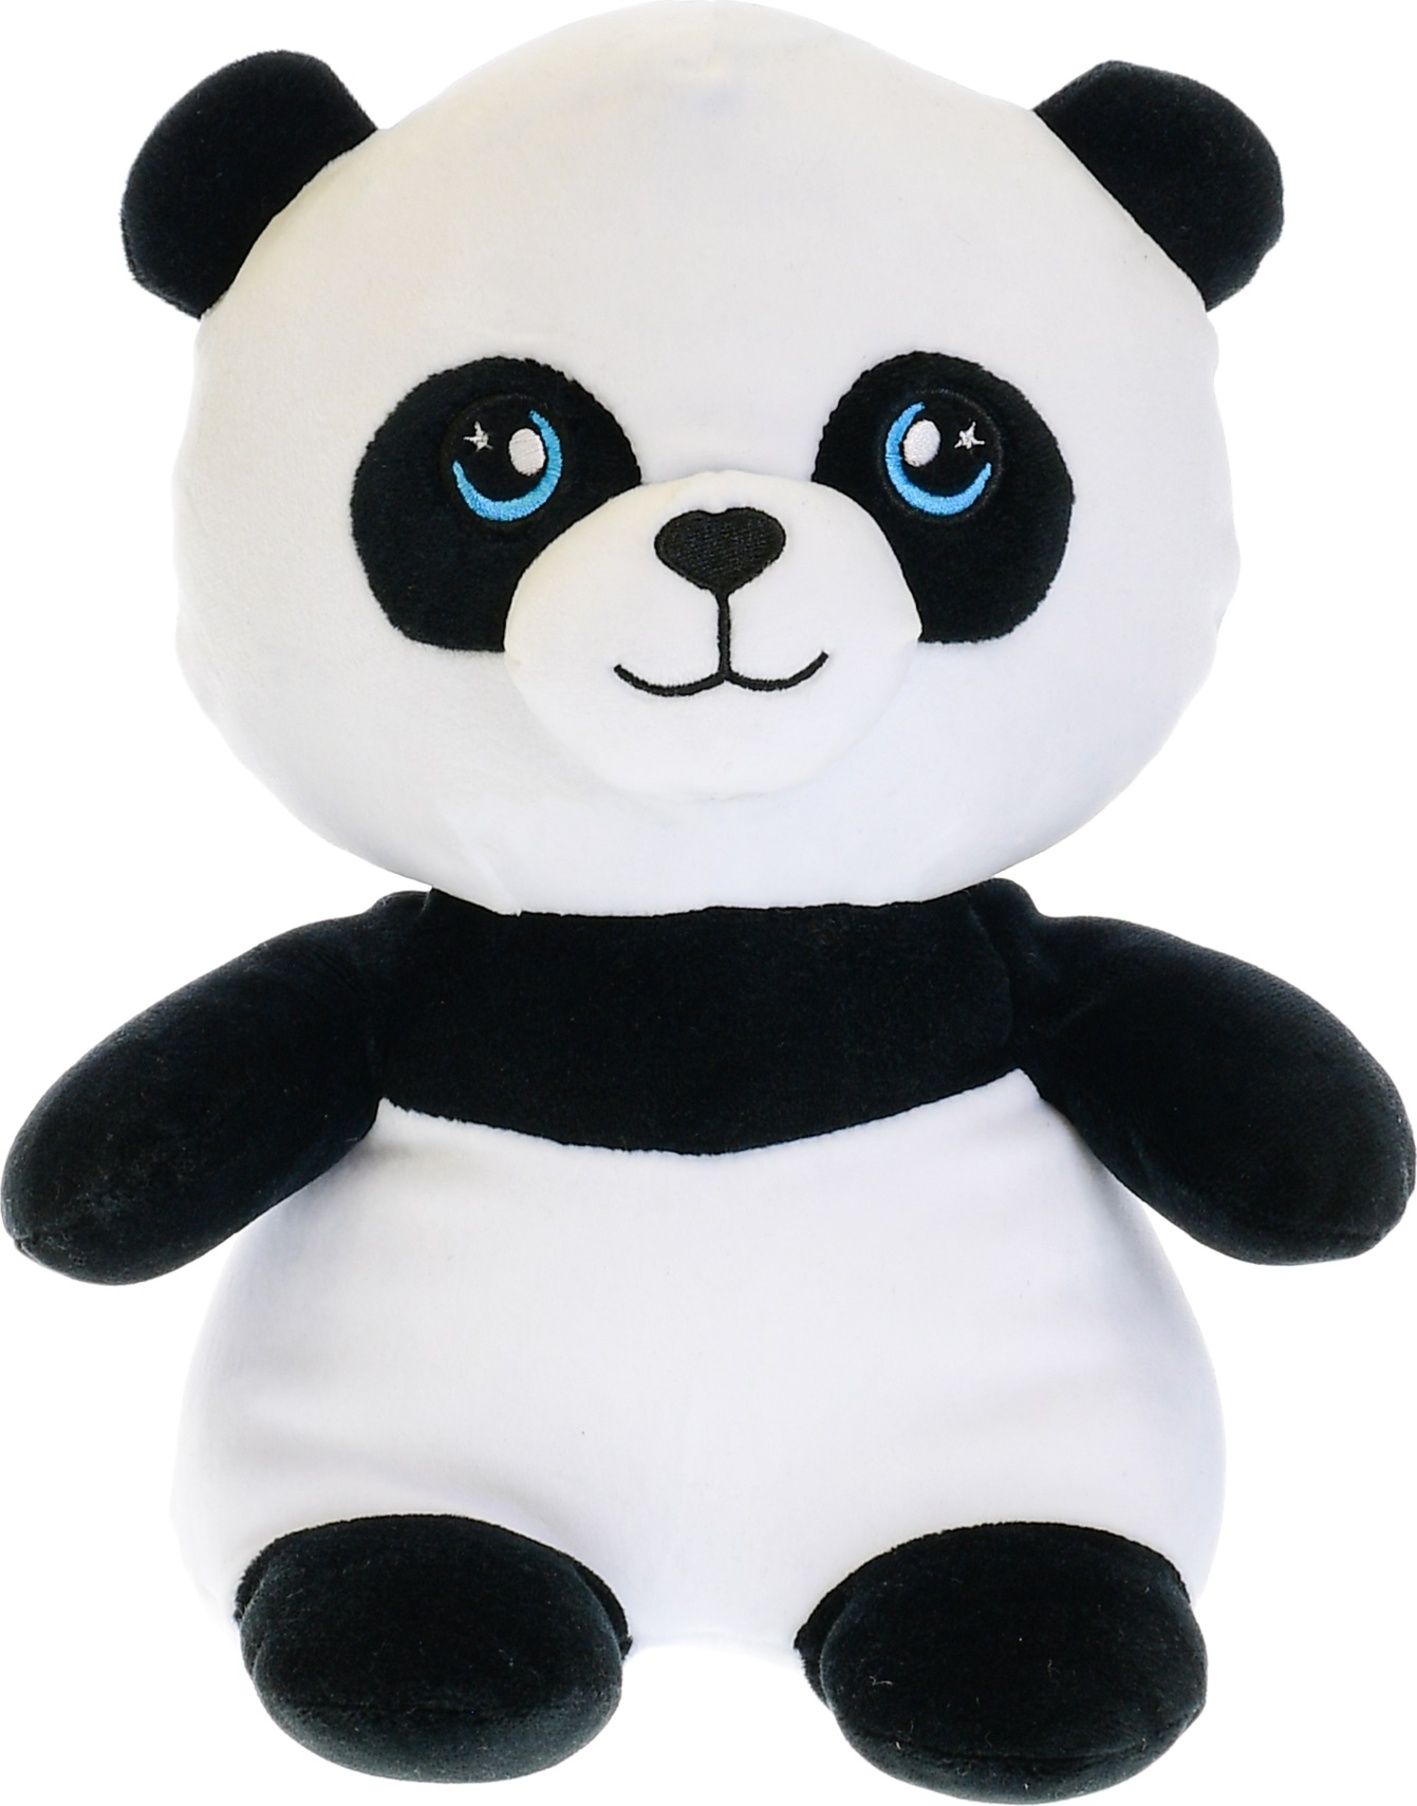 Panda plyšová 15cm spandex 0m+ v sáčku